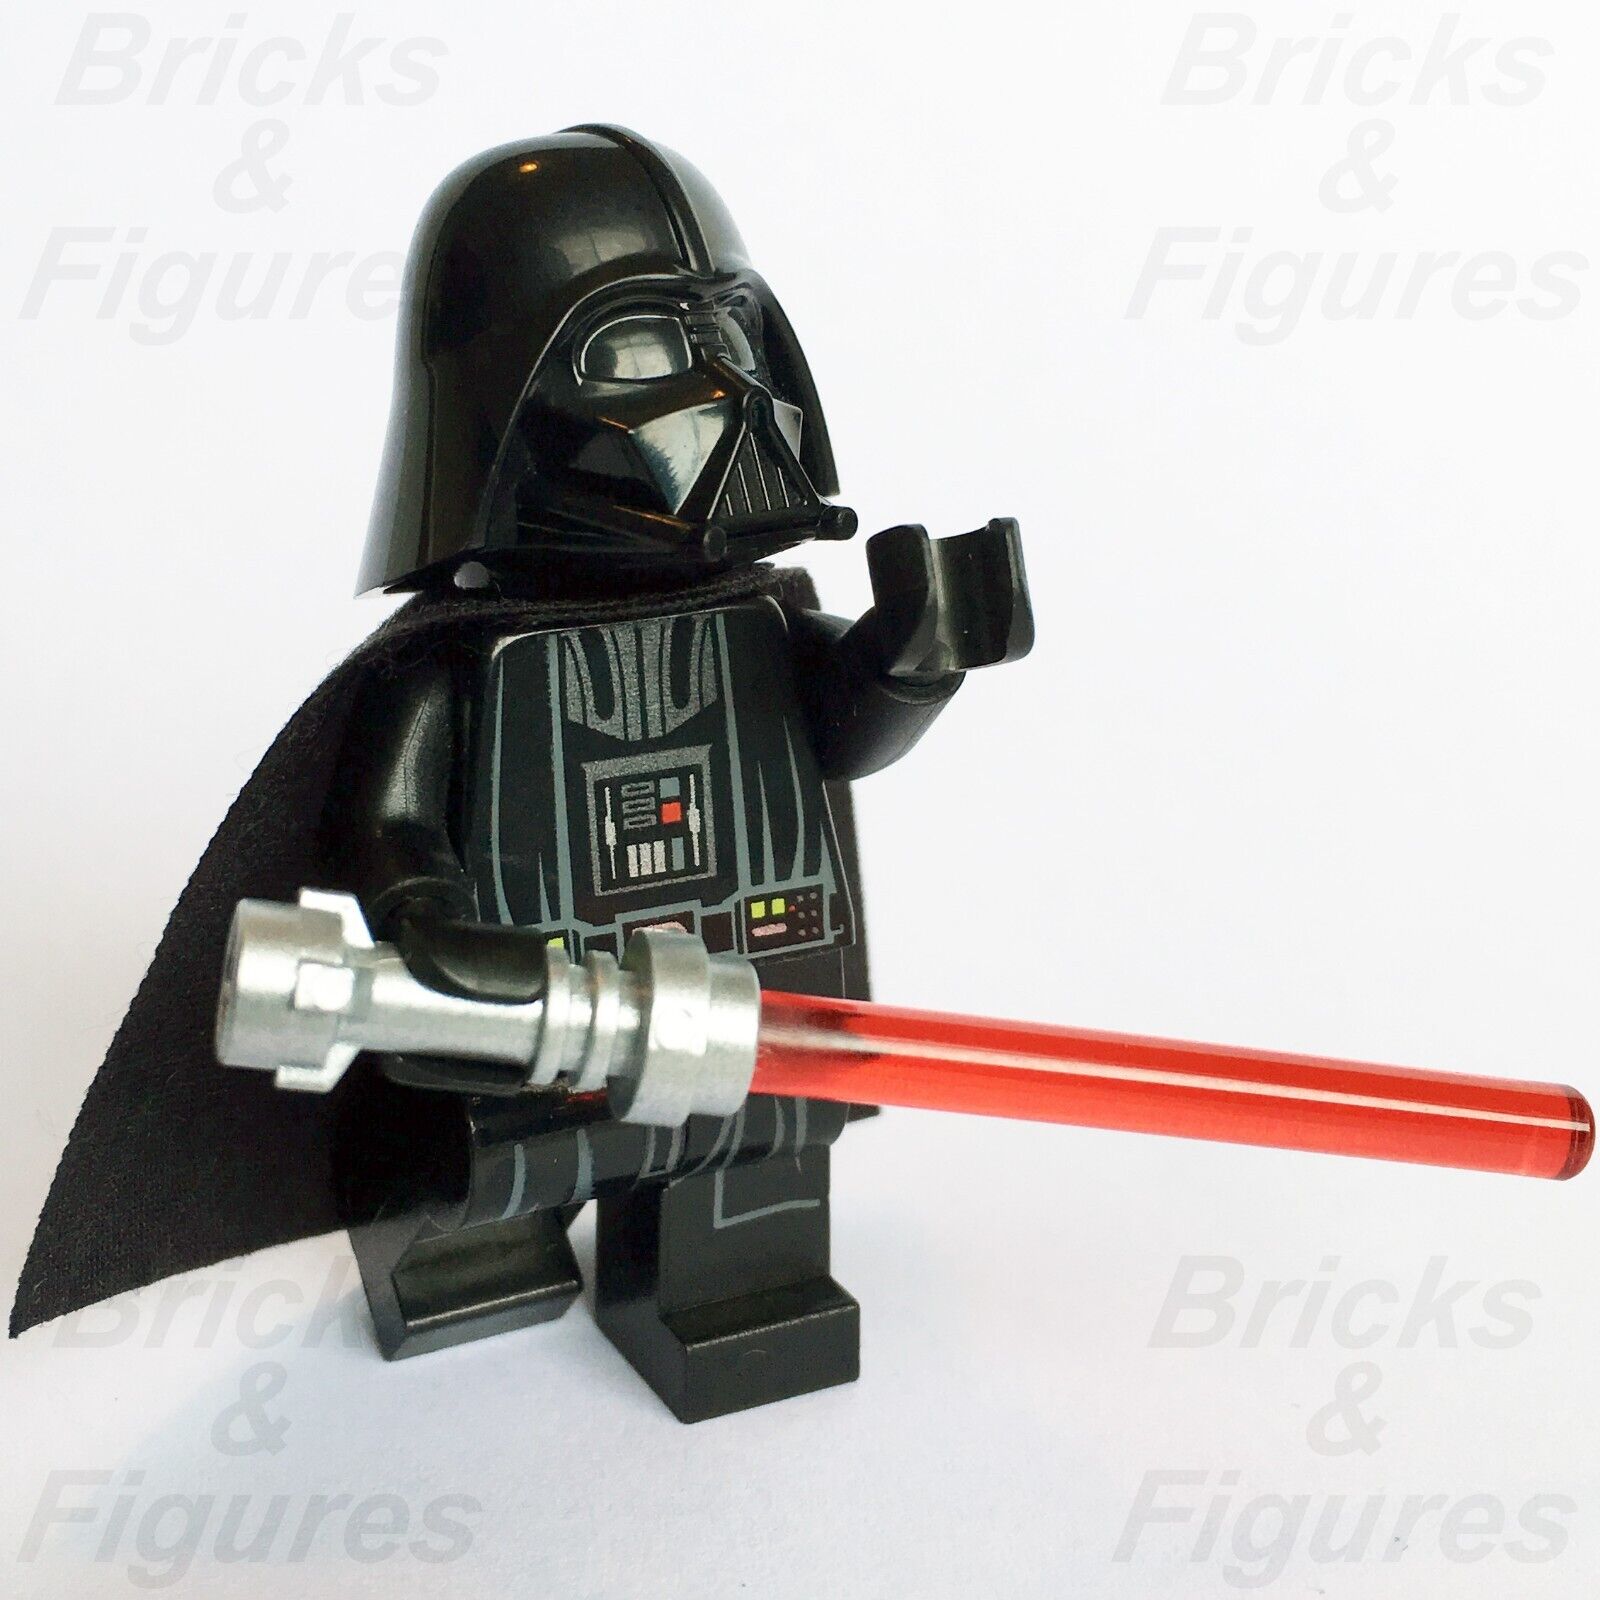 LEGO Star Wars Darth Vader Minifigure Rebels White Head 75150 sw0744 Minifig 2